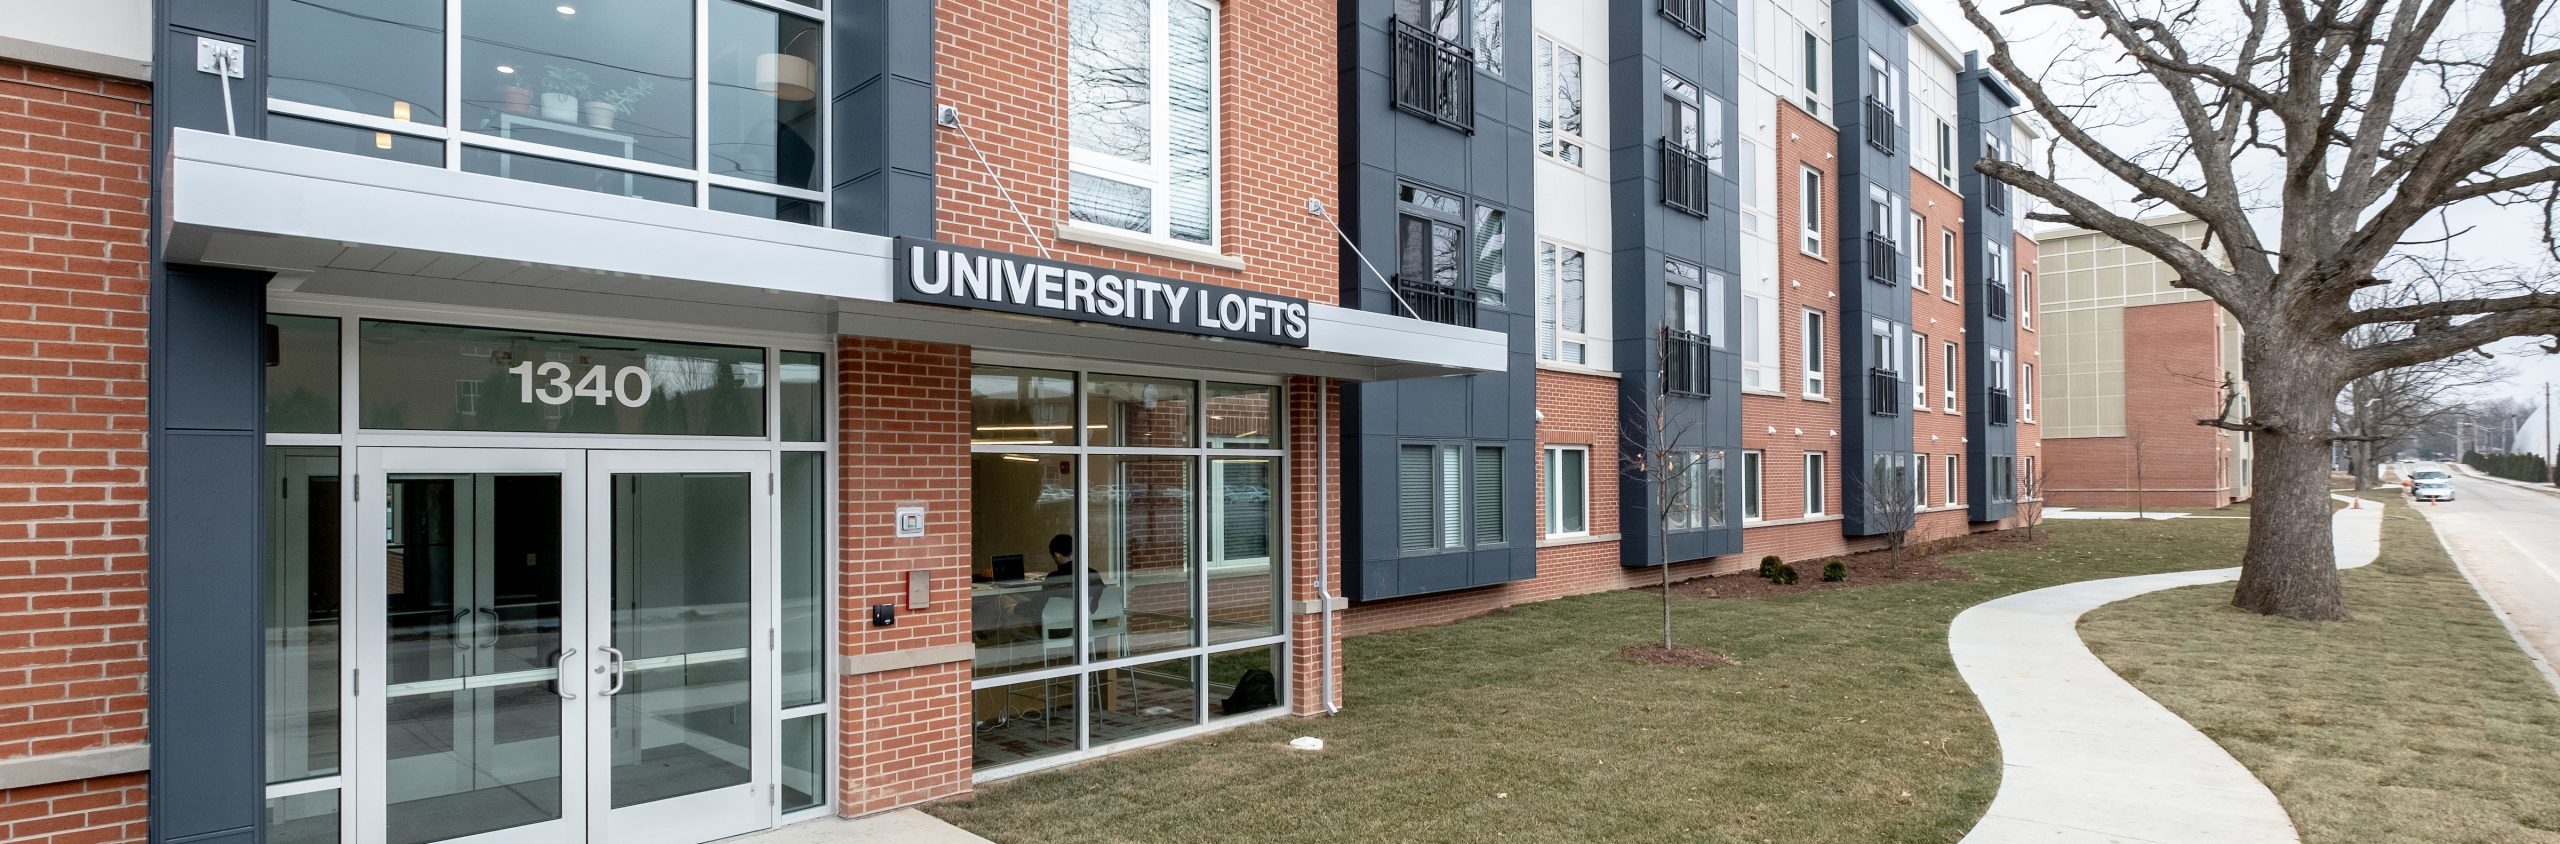 University Lofts